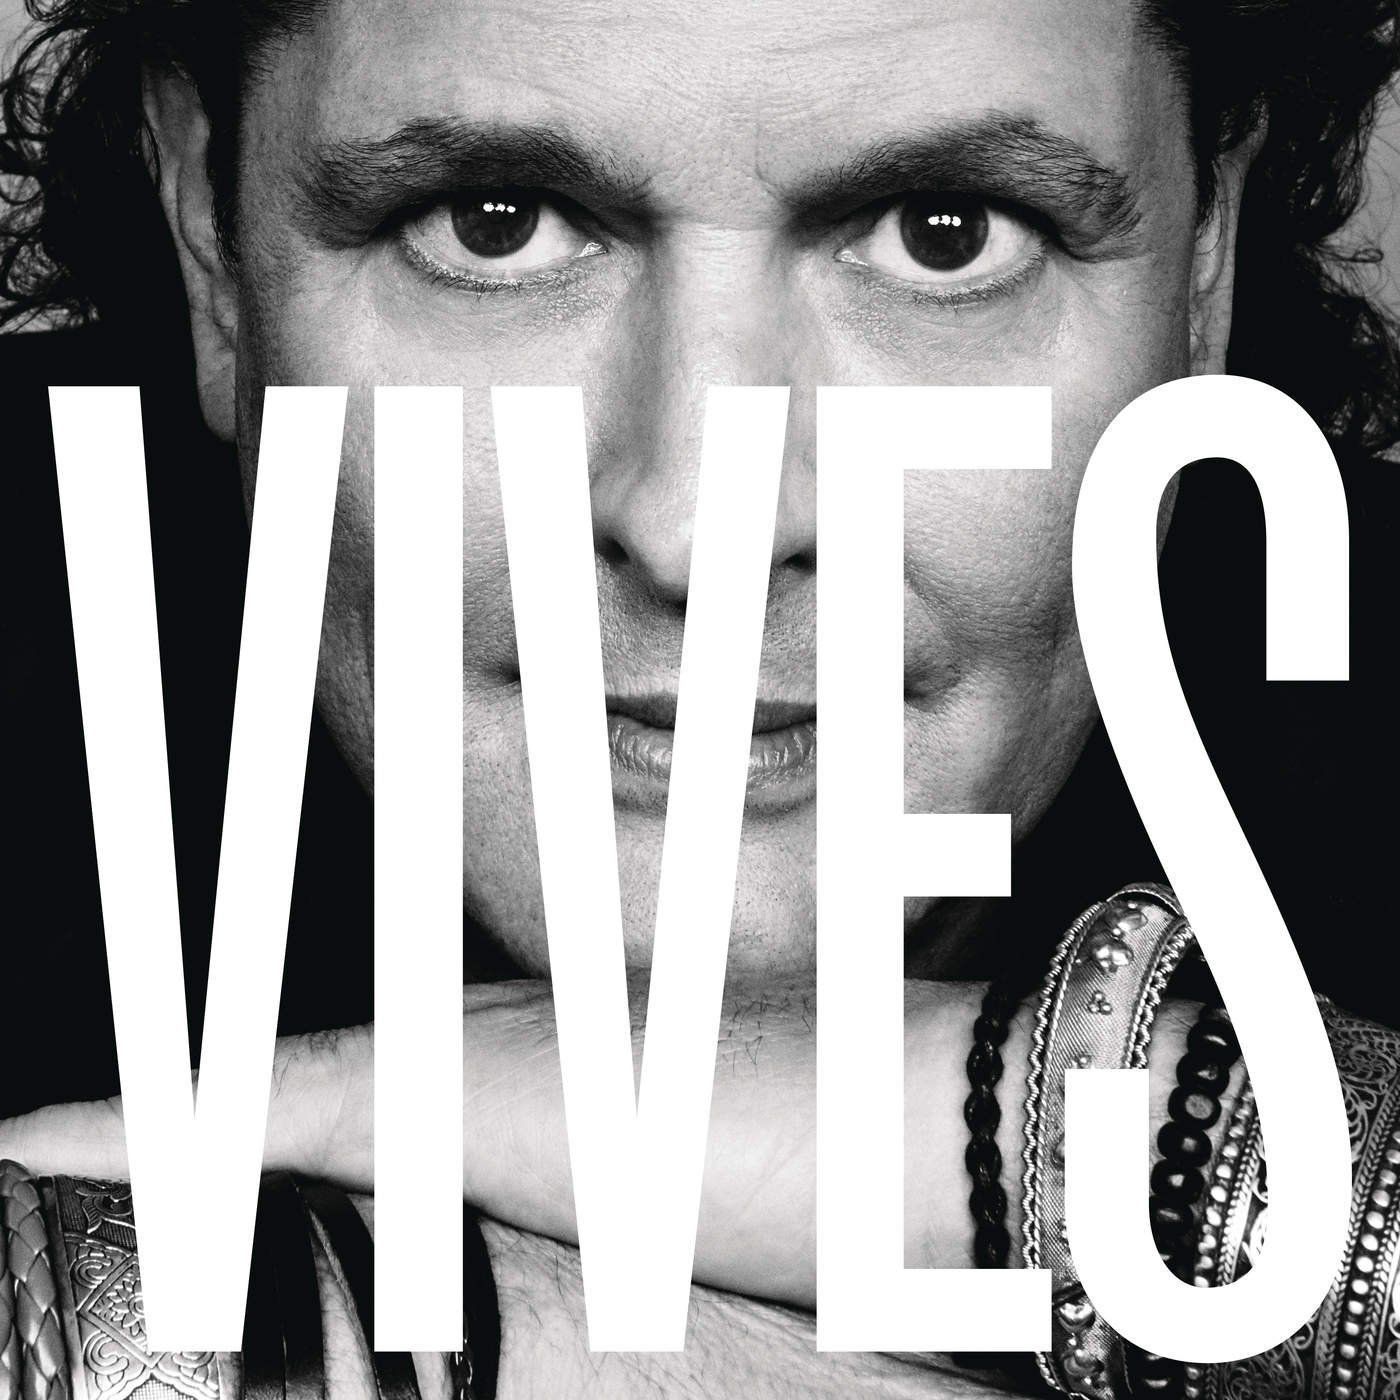 Imagem do álbum VIVES do(a) artista Carlos Vives